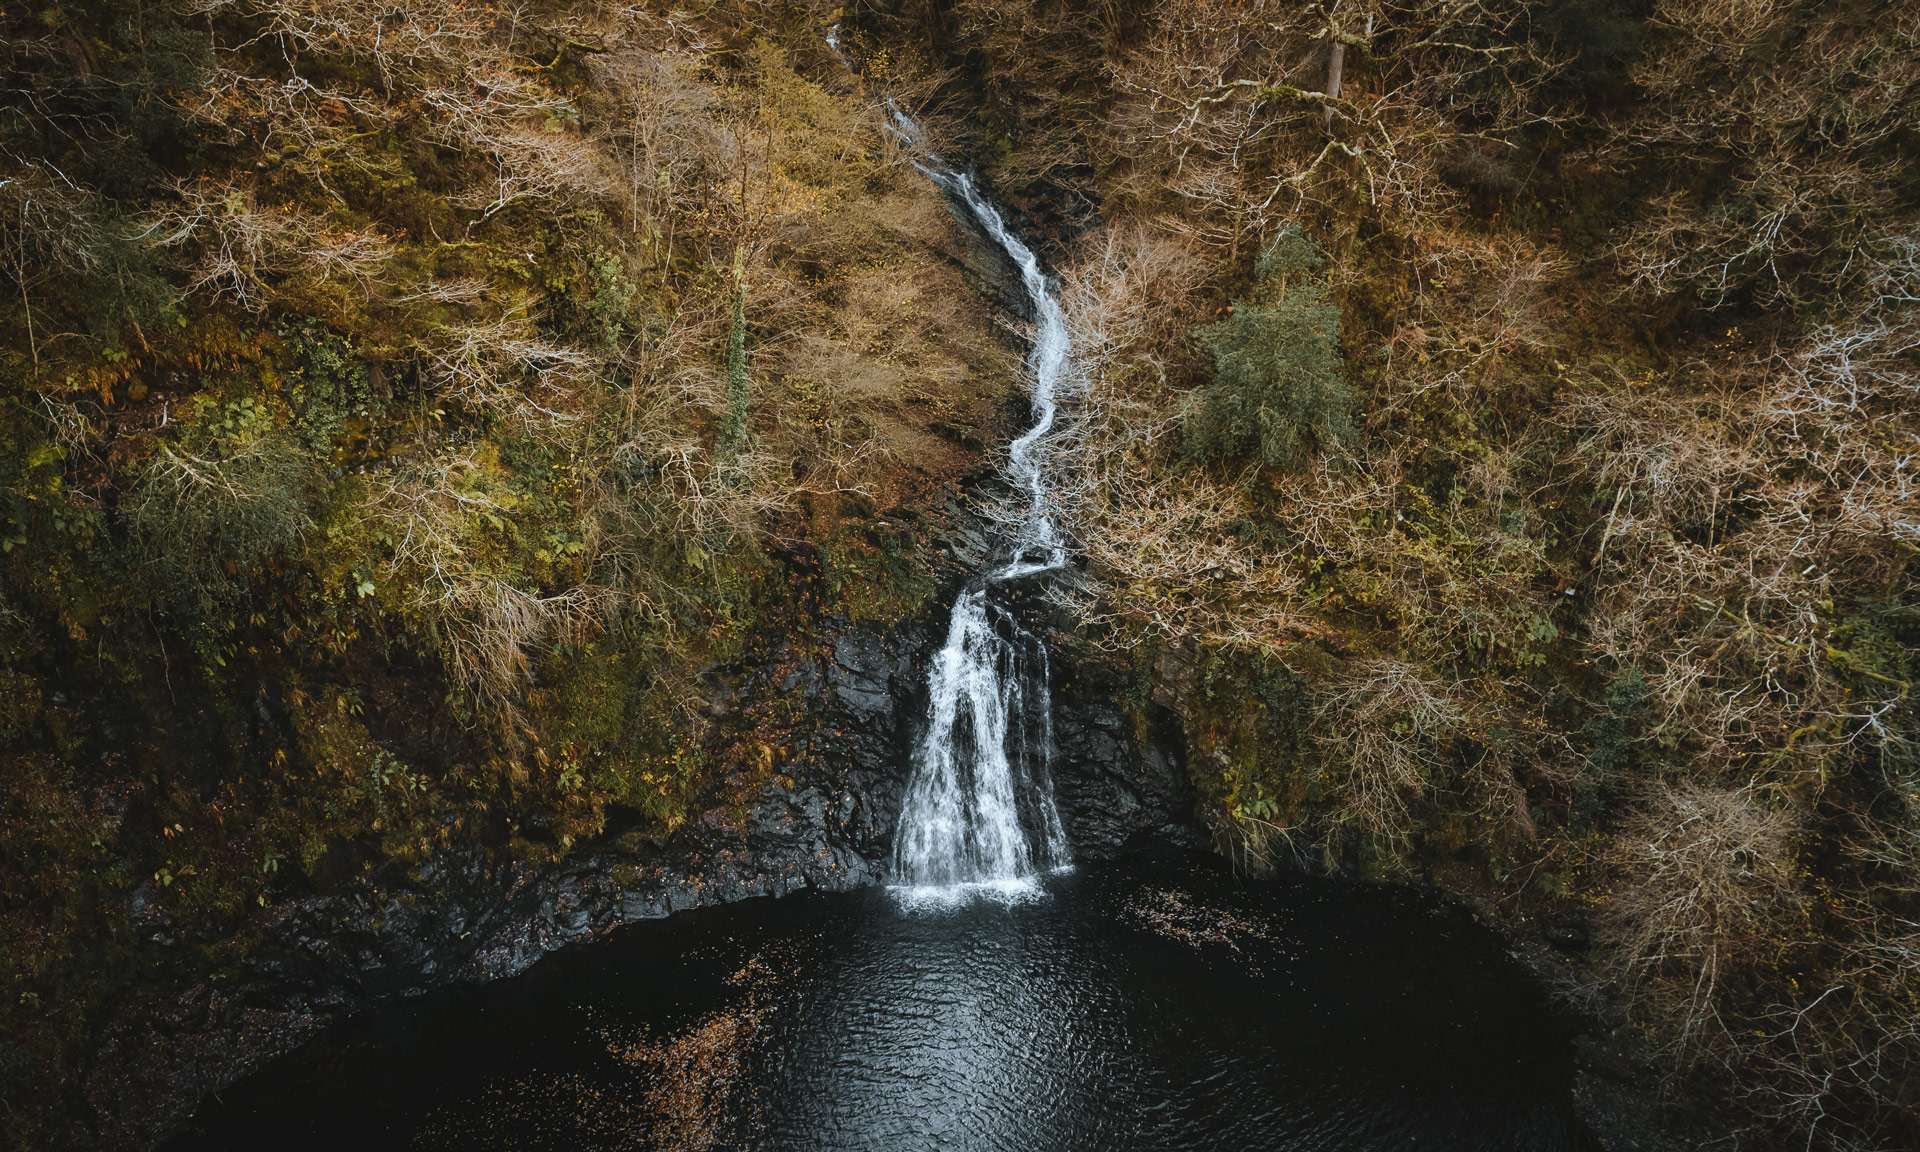 Waterfall at Felenrhyd and Llenyrch woods